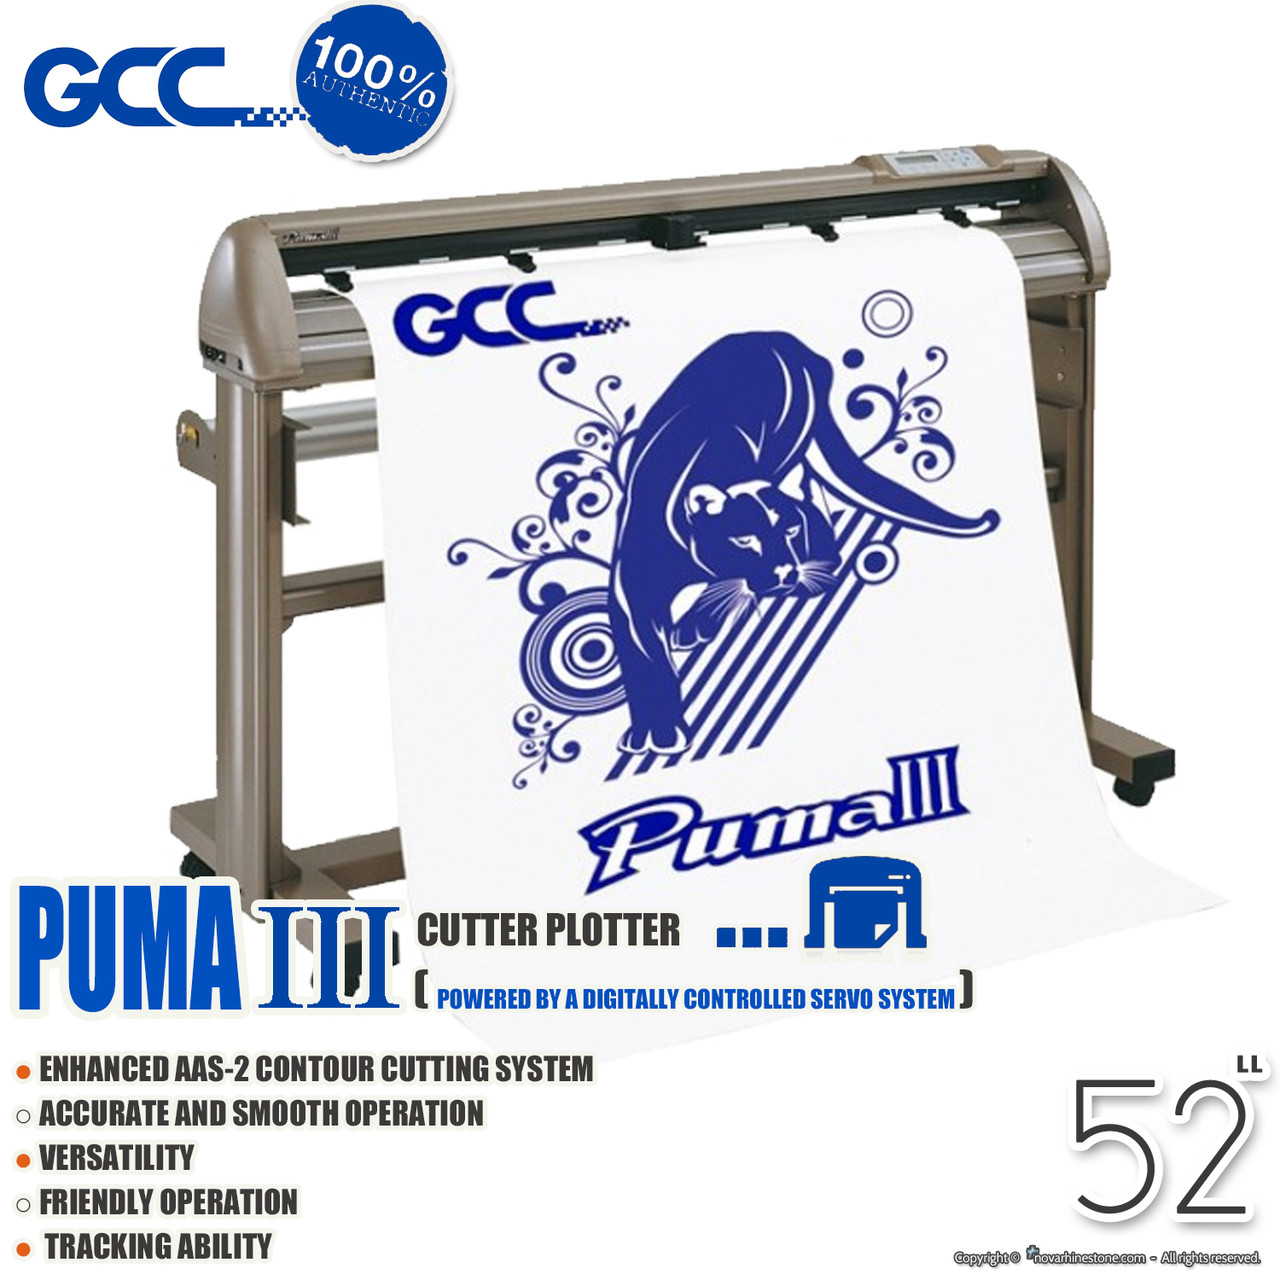 gcc puma iii